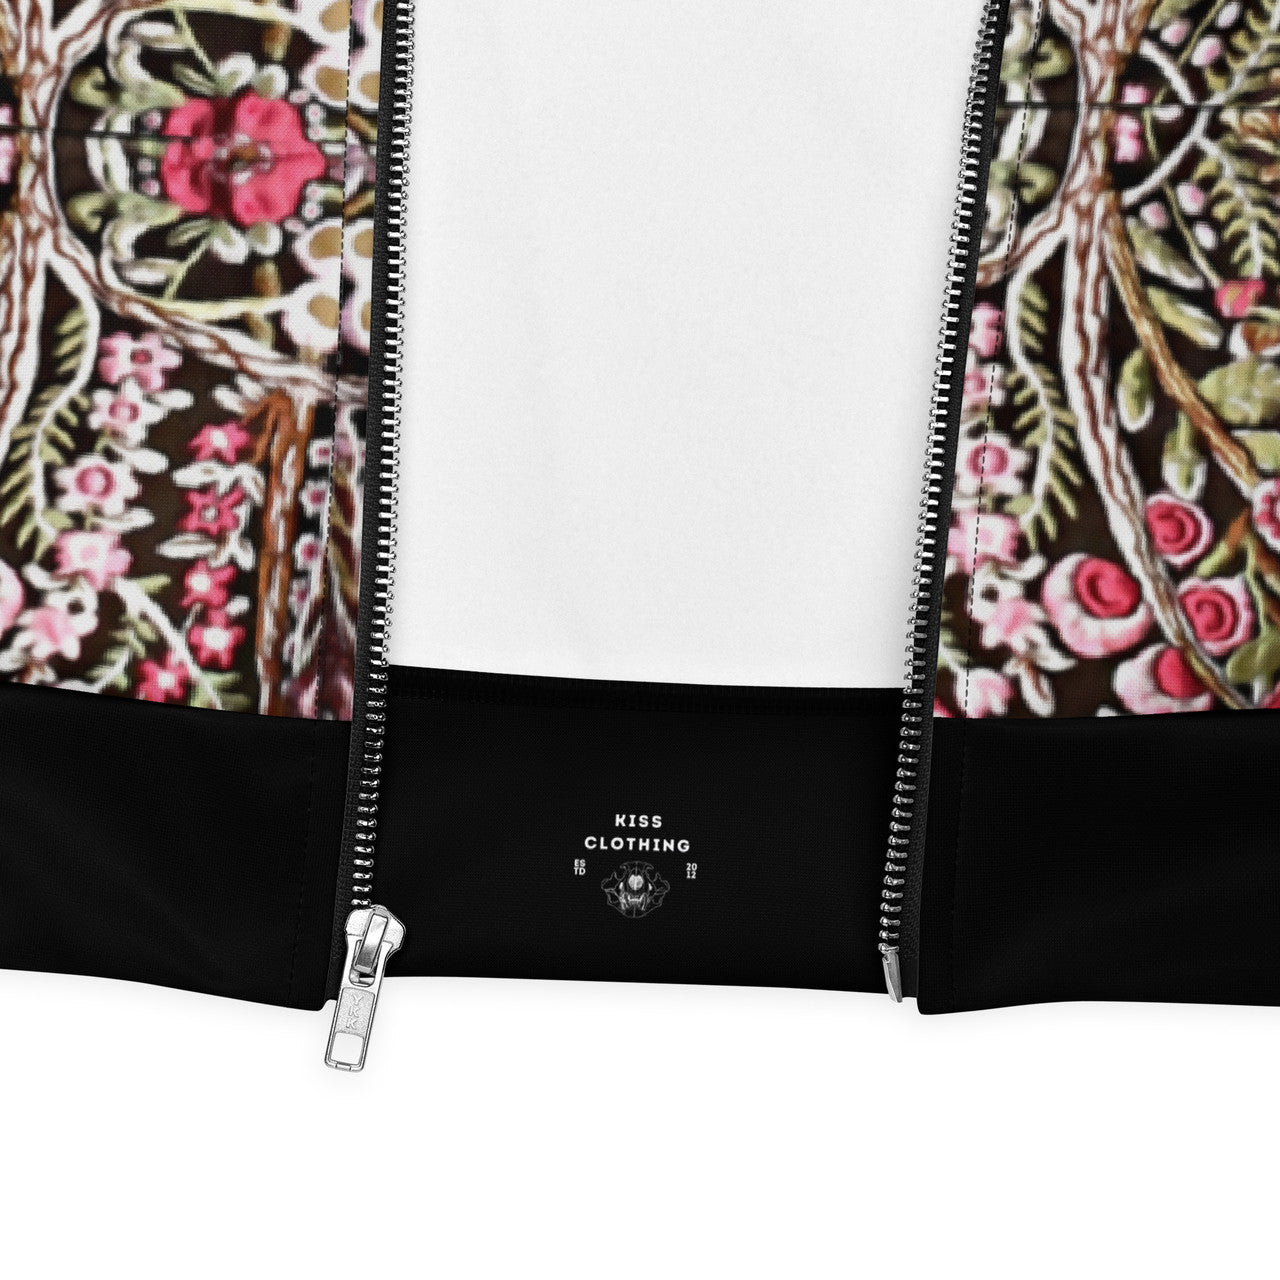 Floral Print KiSS Unisex Bomber Jacket - Villanelle Inspired Style Unique Jodie Comer Killing Eve